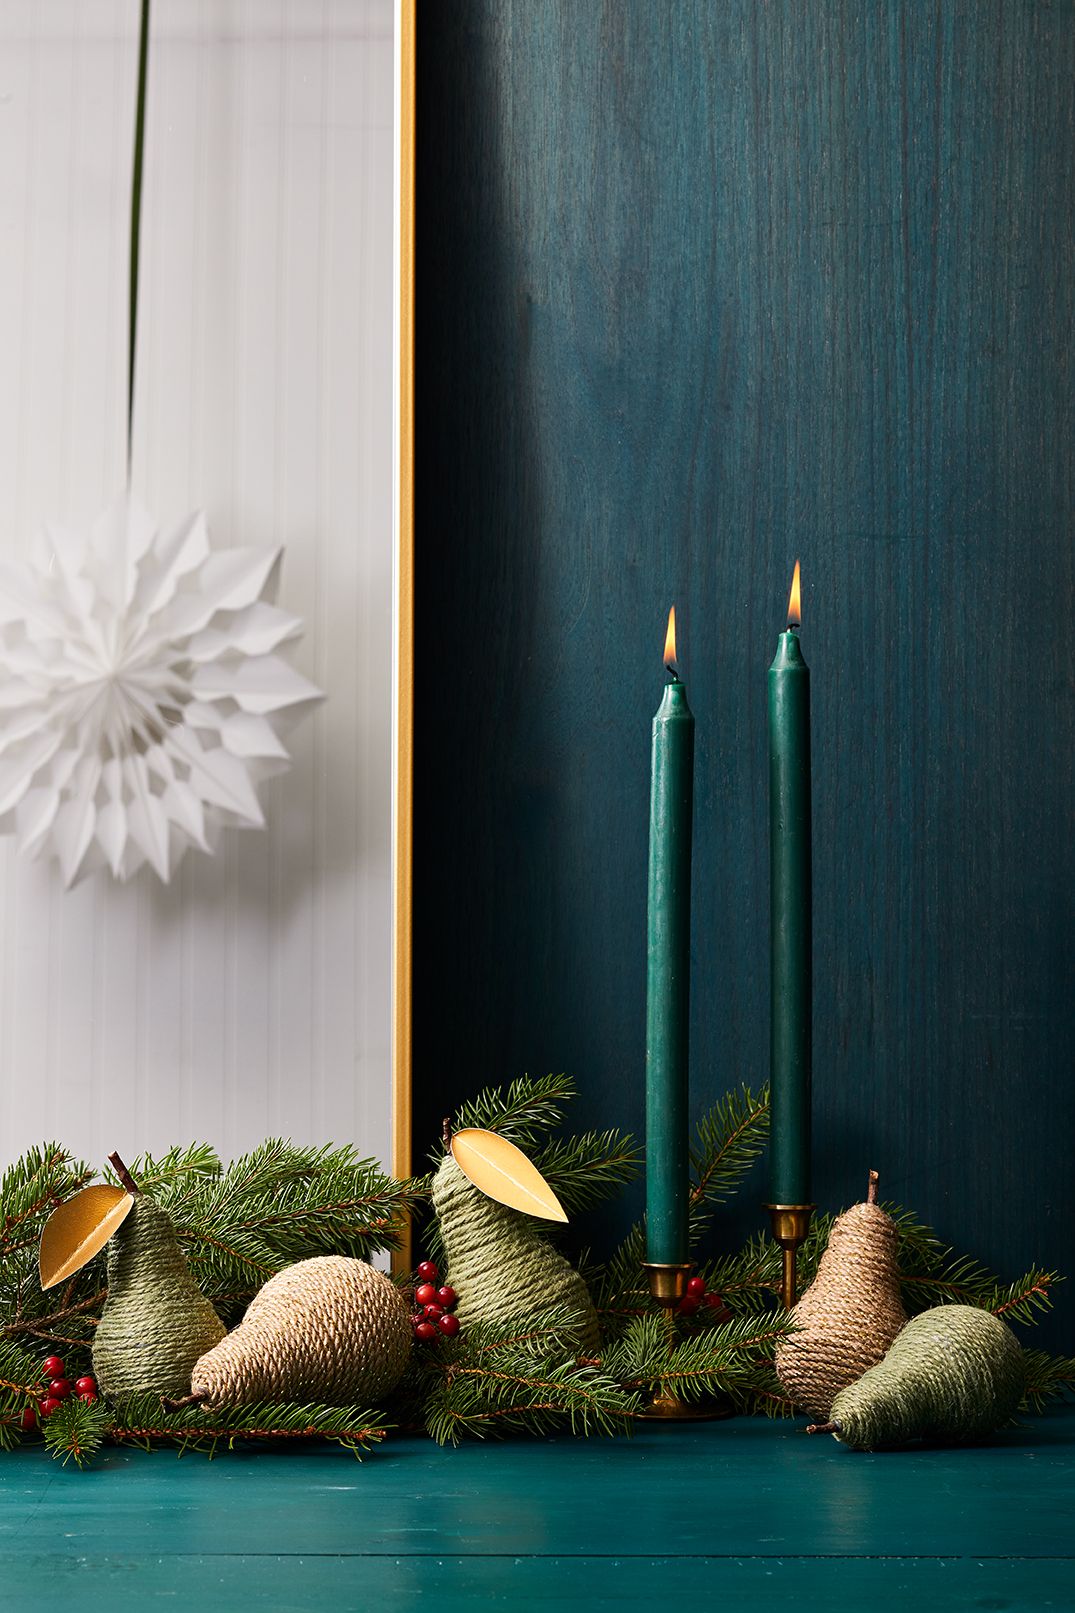 20 Amazing Christmas Tree Decorating Ideas | A Blissful Nest